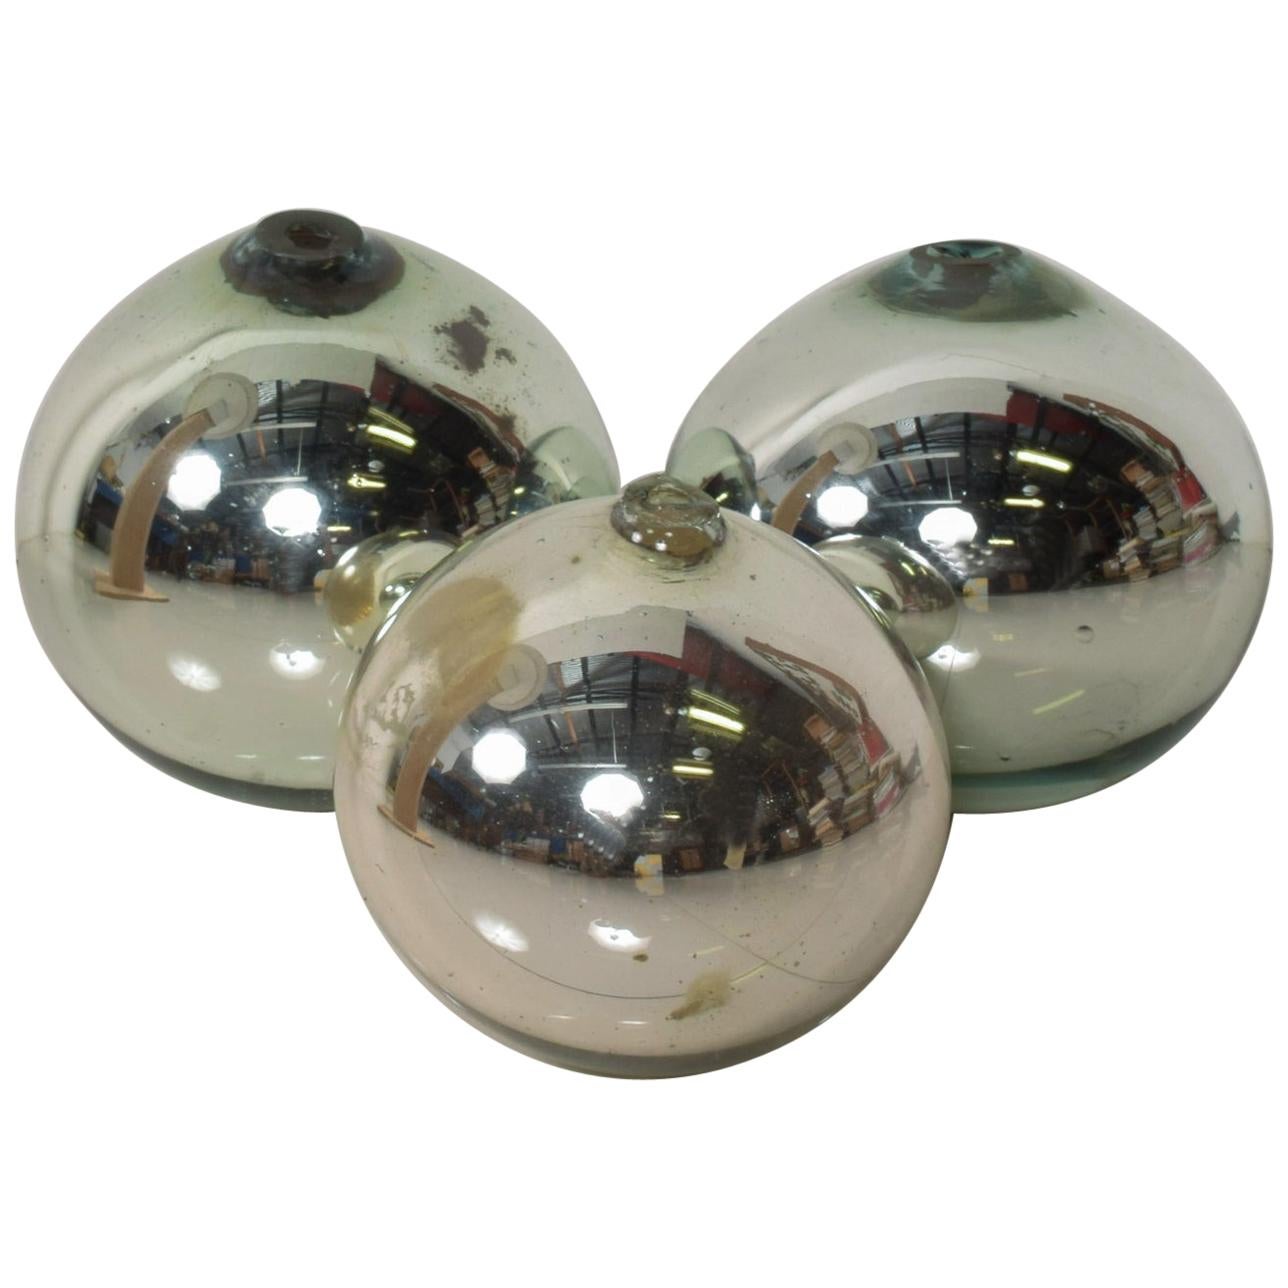 Vintage 1950s Mexico Mercury Glass Globes Gazing Ball Spheres- set of 3